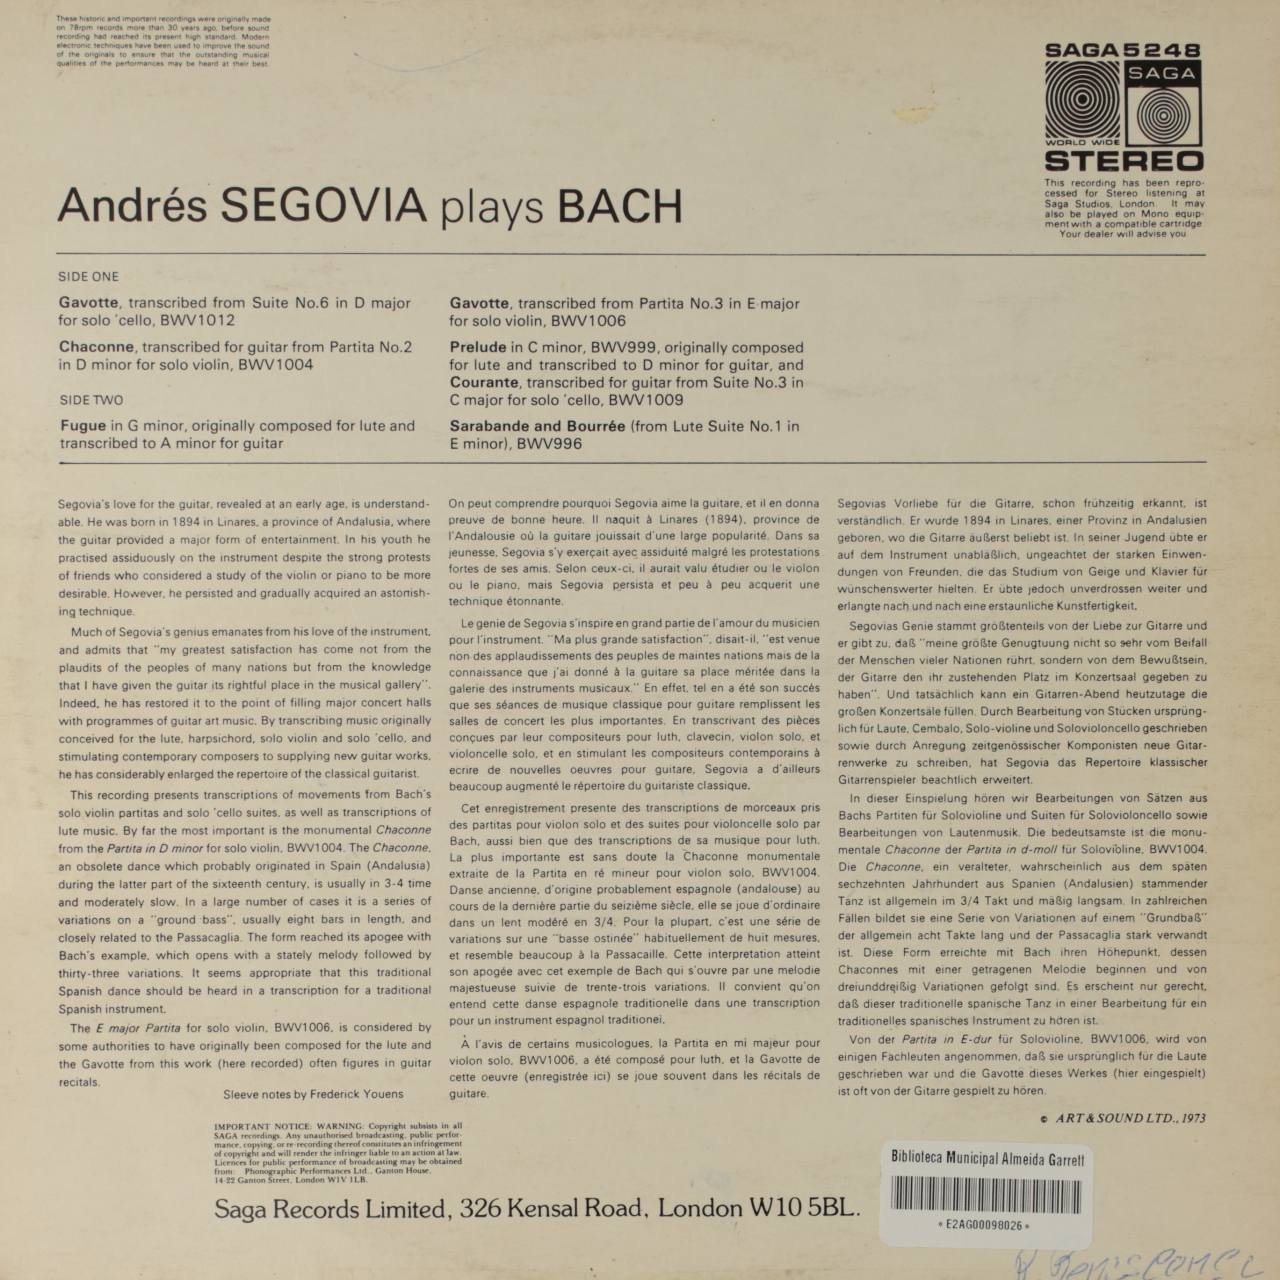 Bach: Andrés Segovia Plays Bach